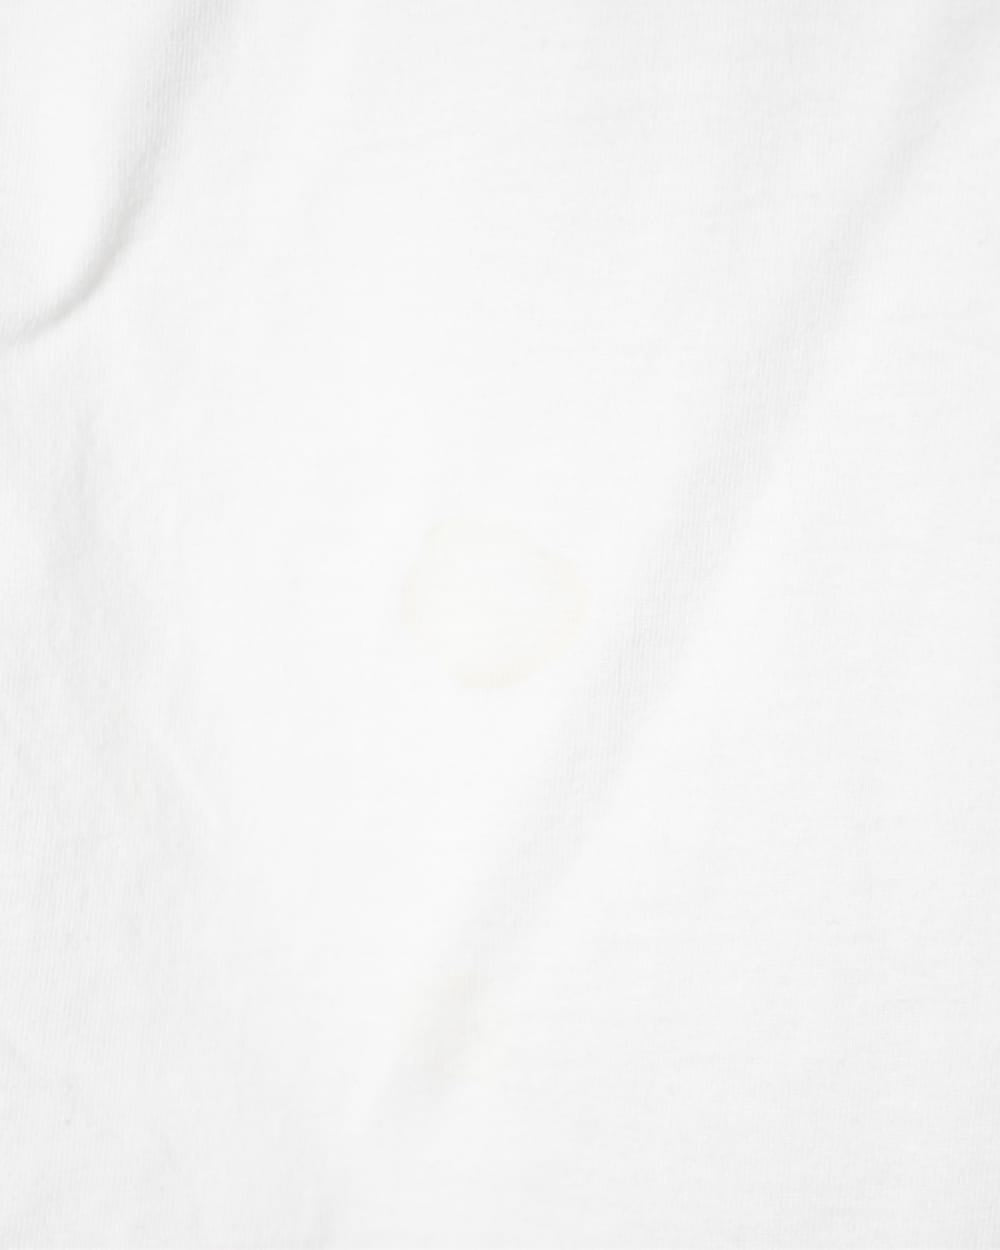 White Hard Rock Café Stockholm T-Shirt - Small